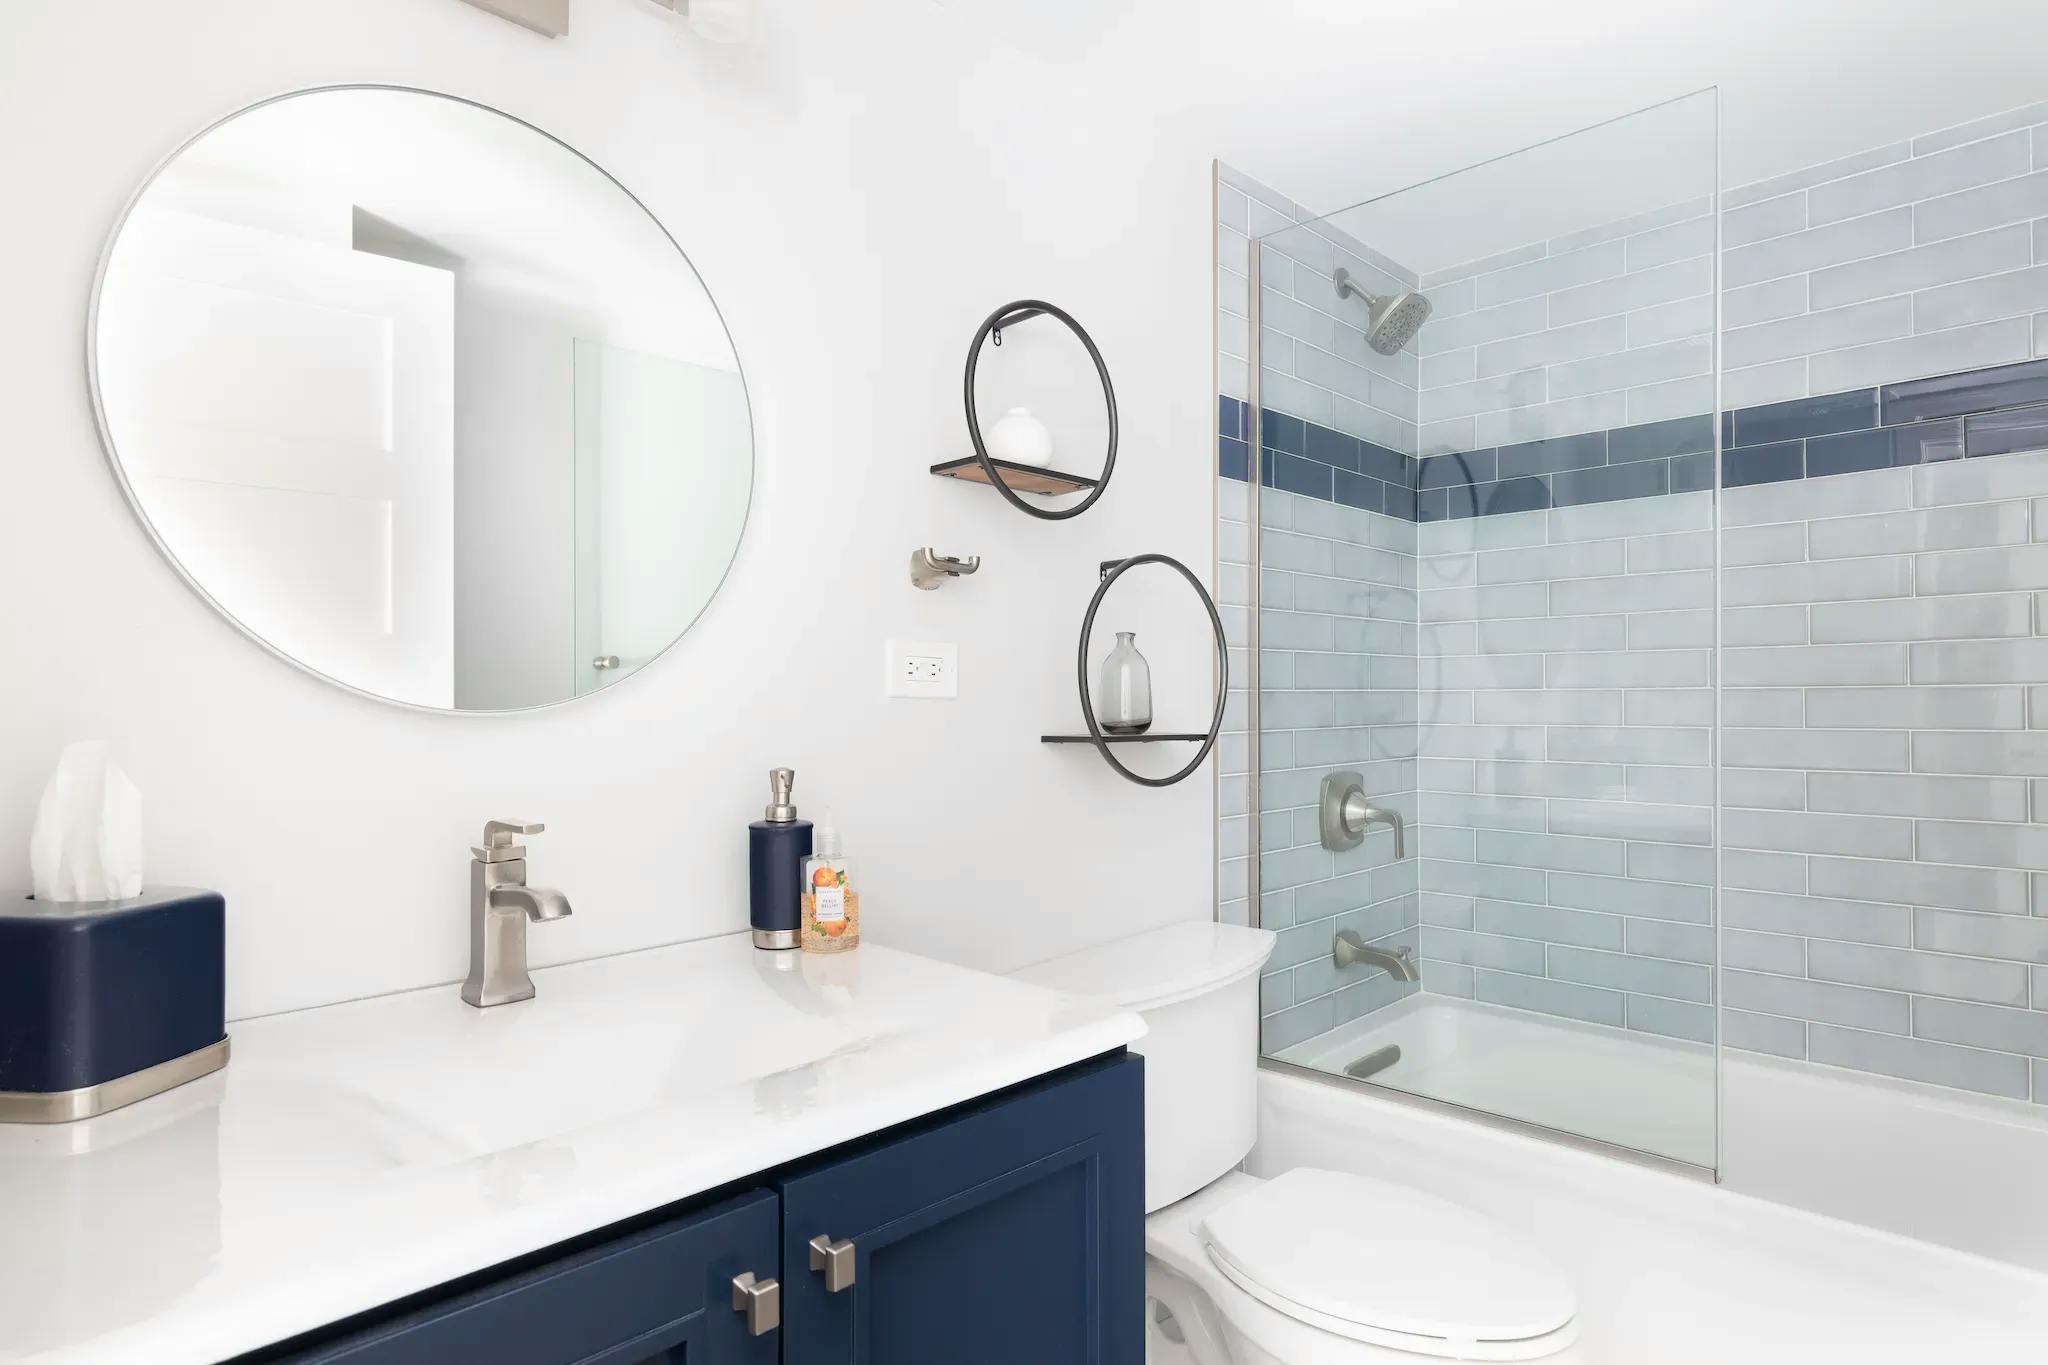 White bathroom, sliding shower door, blue strip on white tile, chrome hardware. Round mirror above white granite sink, black shelving, toilet next to sink.